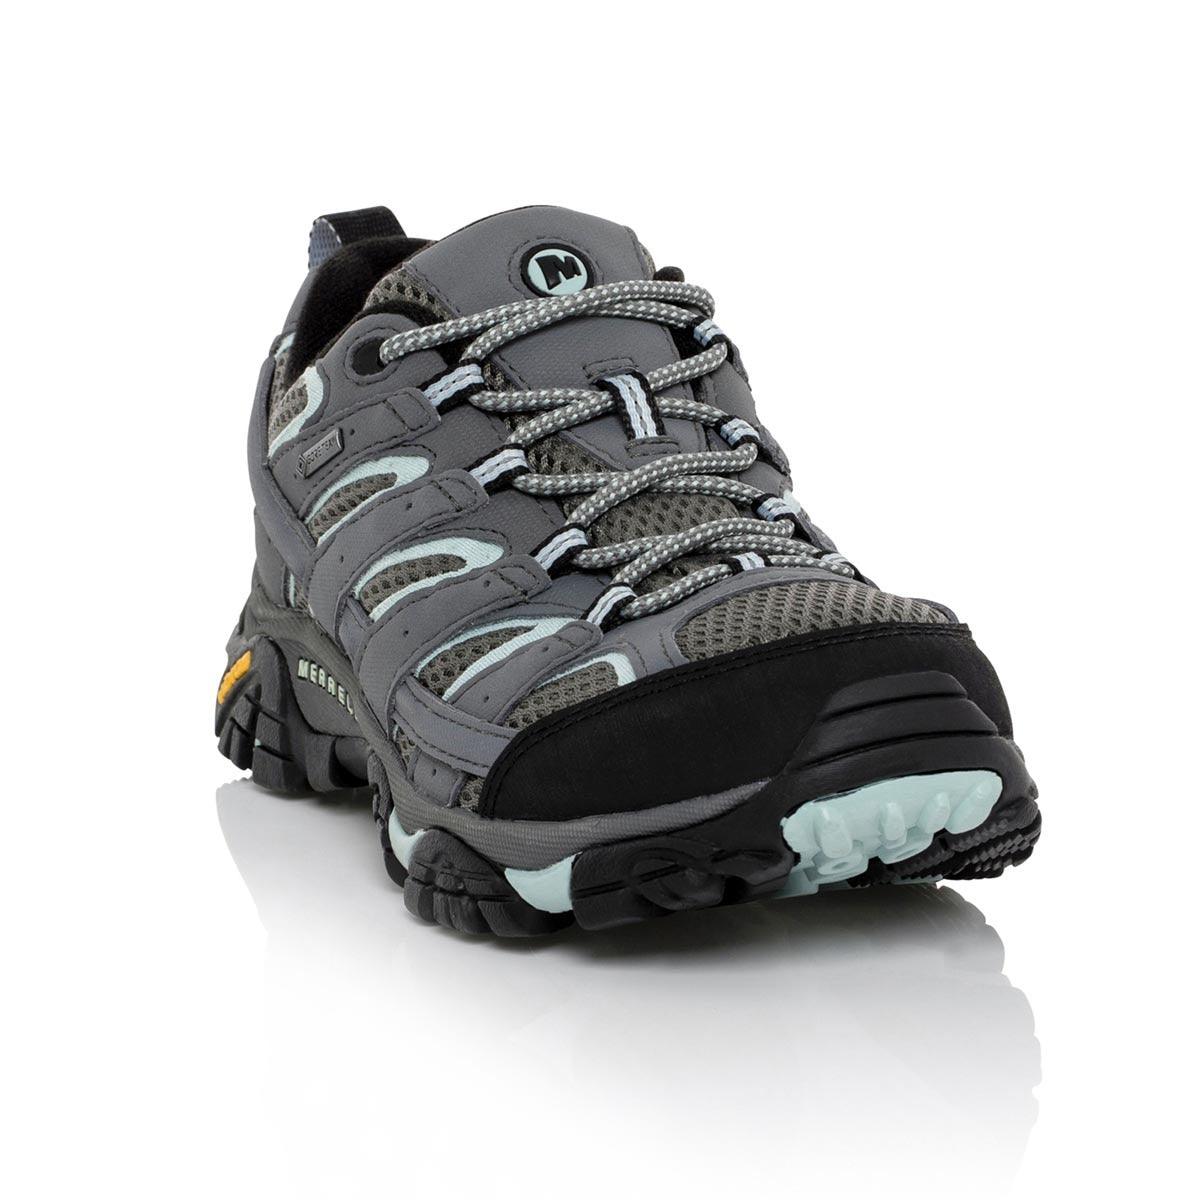 Shop Merrell Women's 2 GTX Hiking Boots | Pair Australia